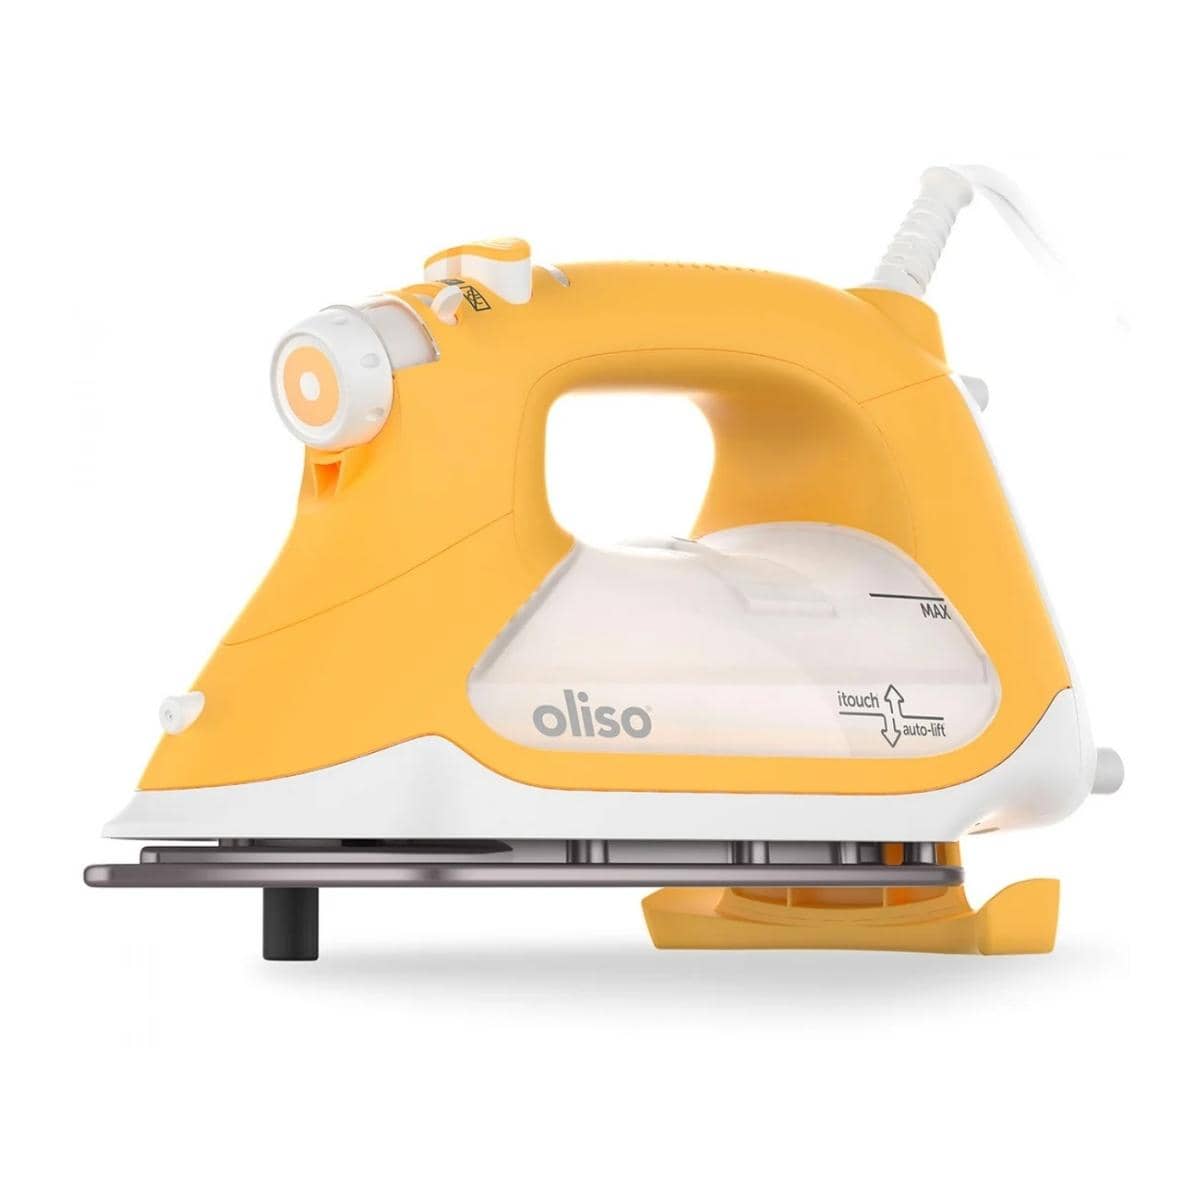 Oliso Iron TG1600 Pro Plus Auto-lift Smart Iron